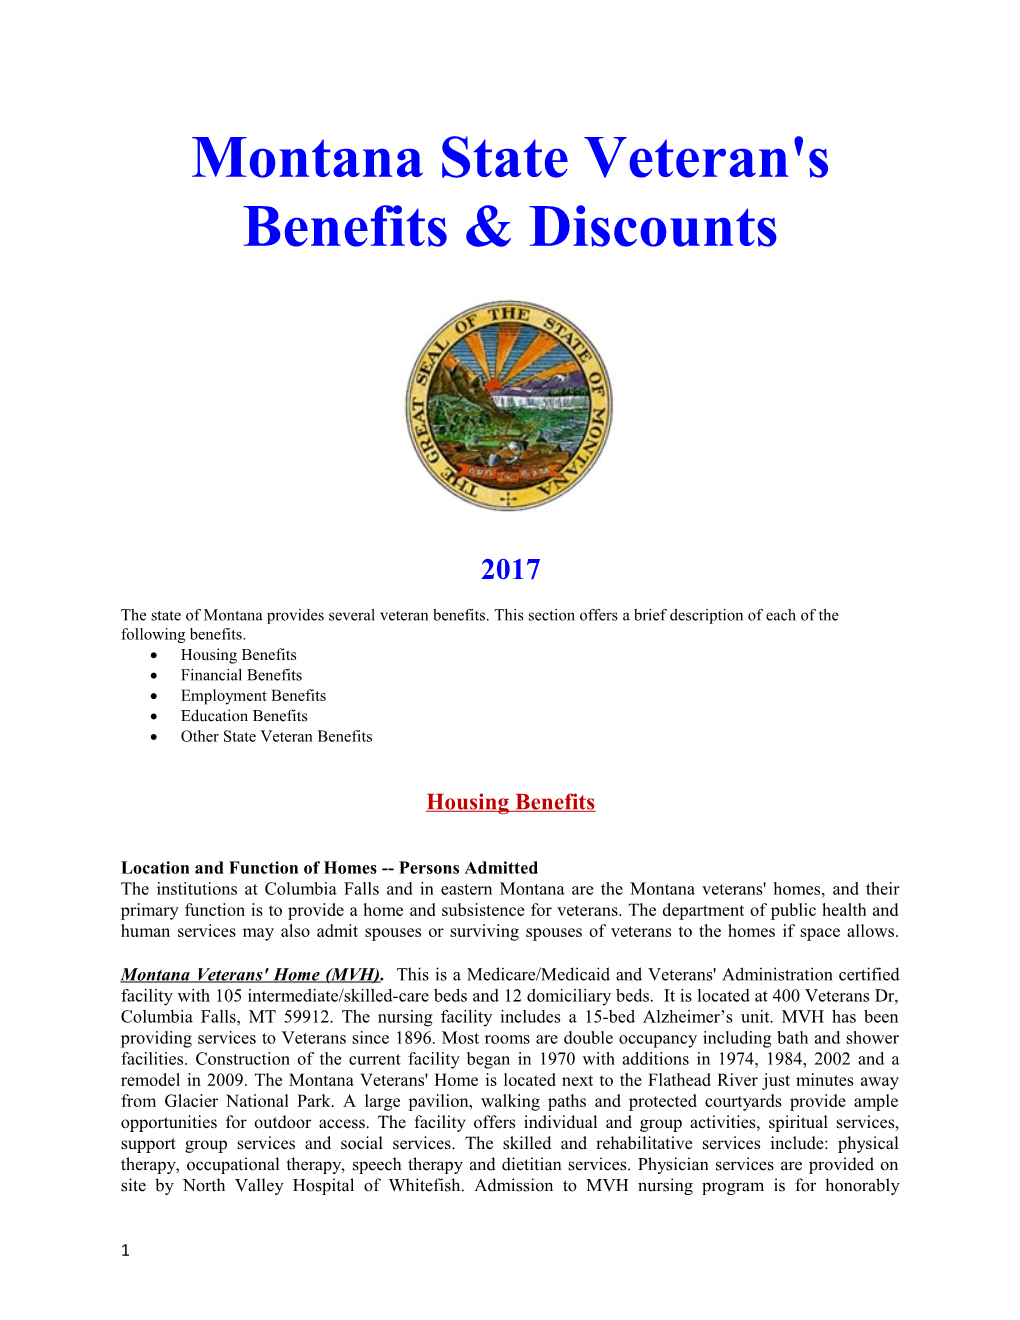 Montana State Veteran's Benefits & Discounts